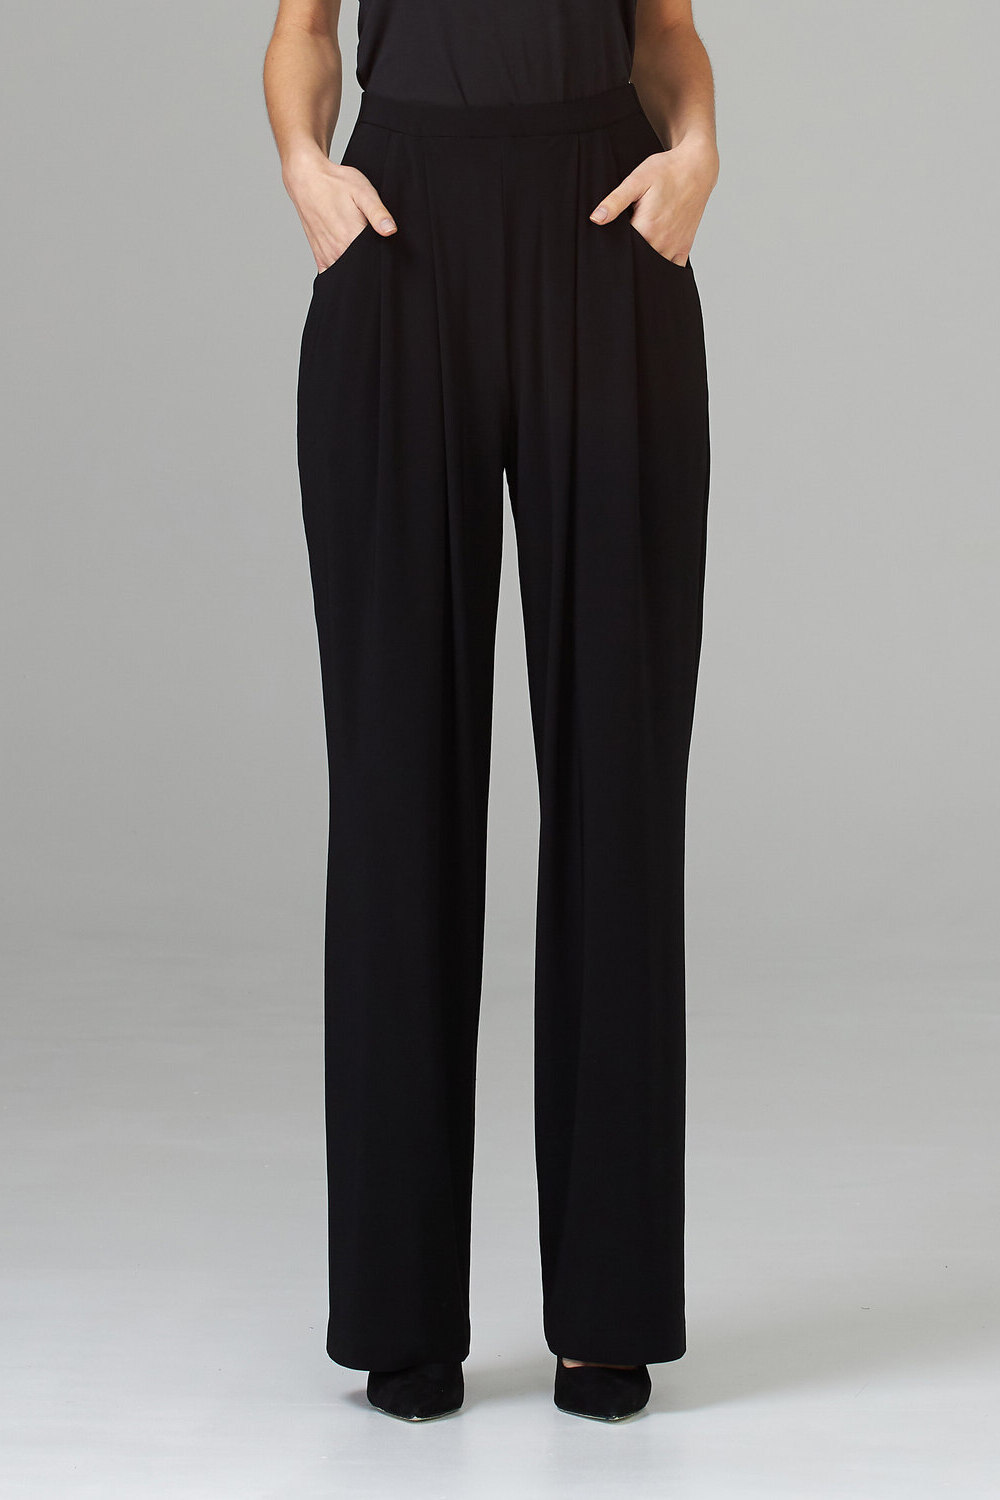 Joseph Ribkoff pantalon style 201206. Noir